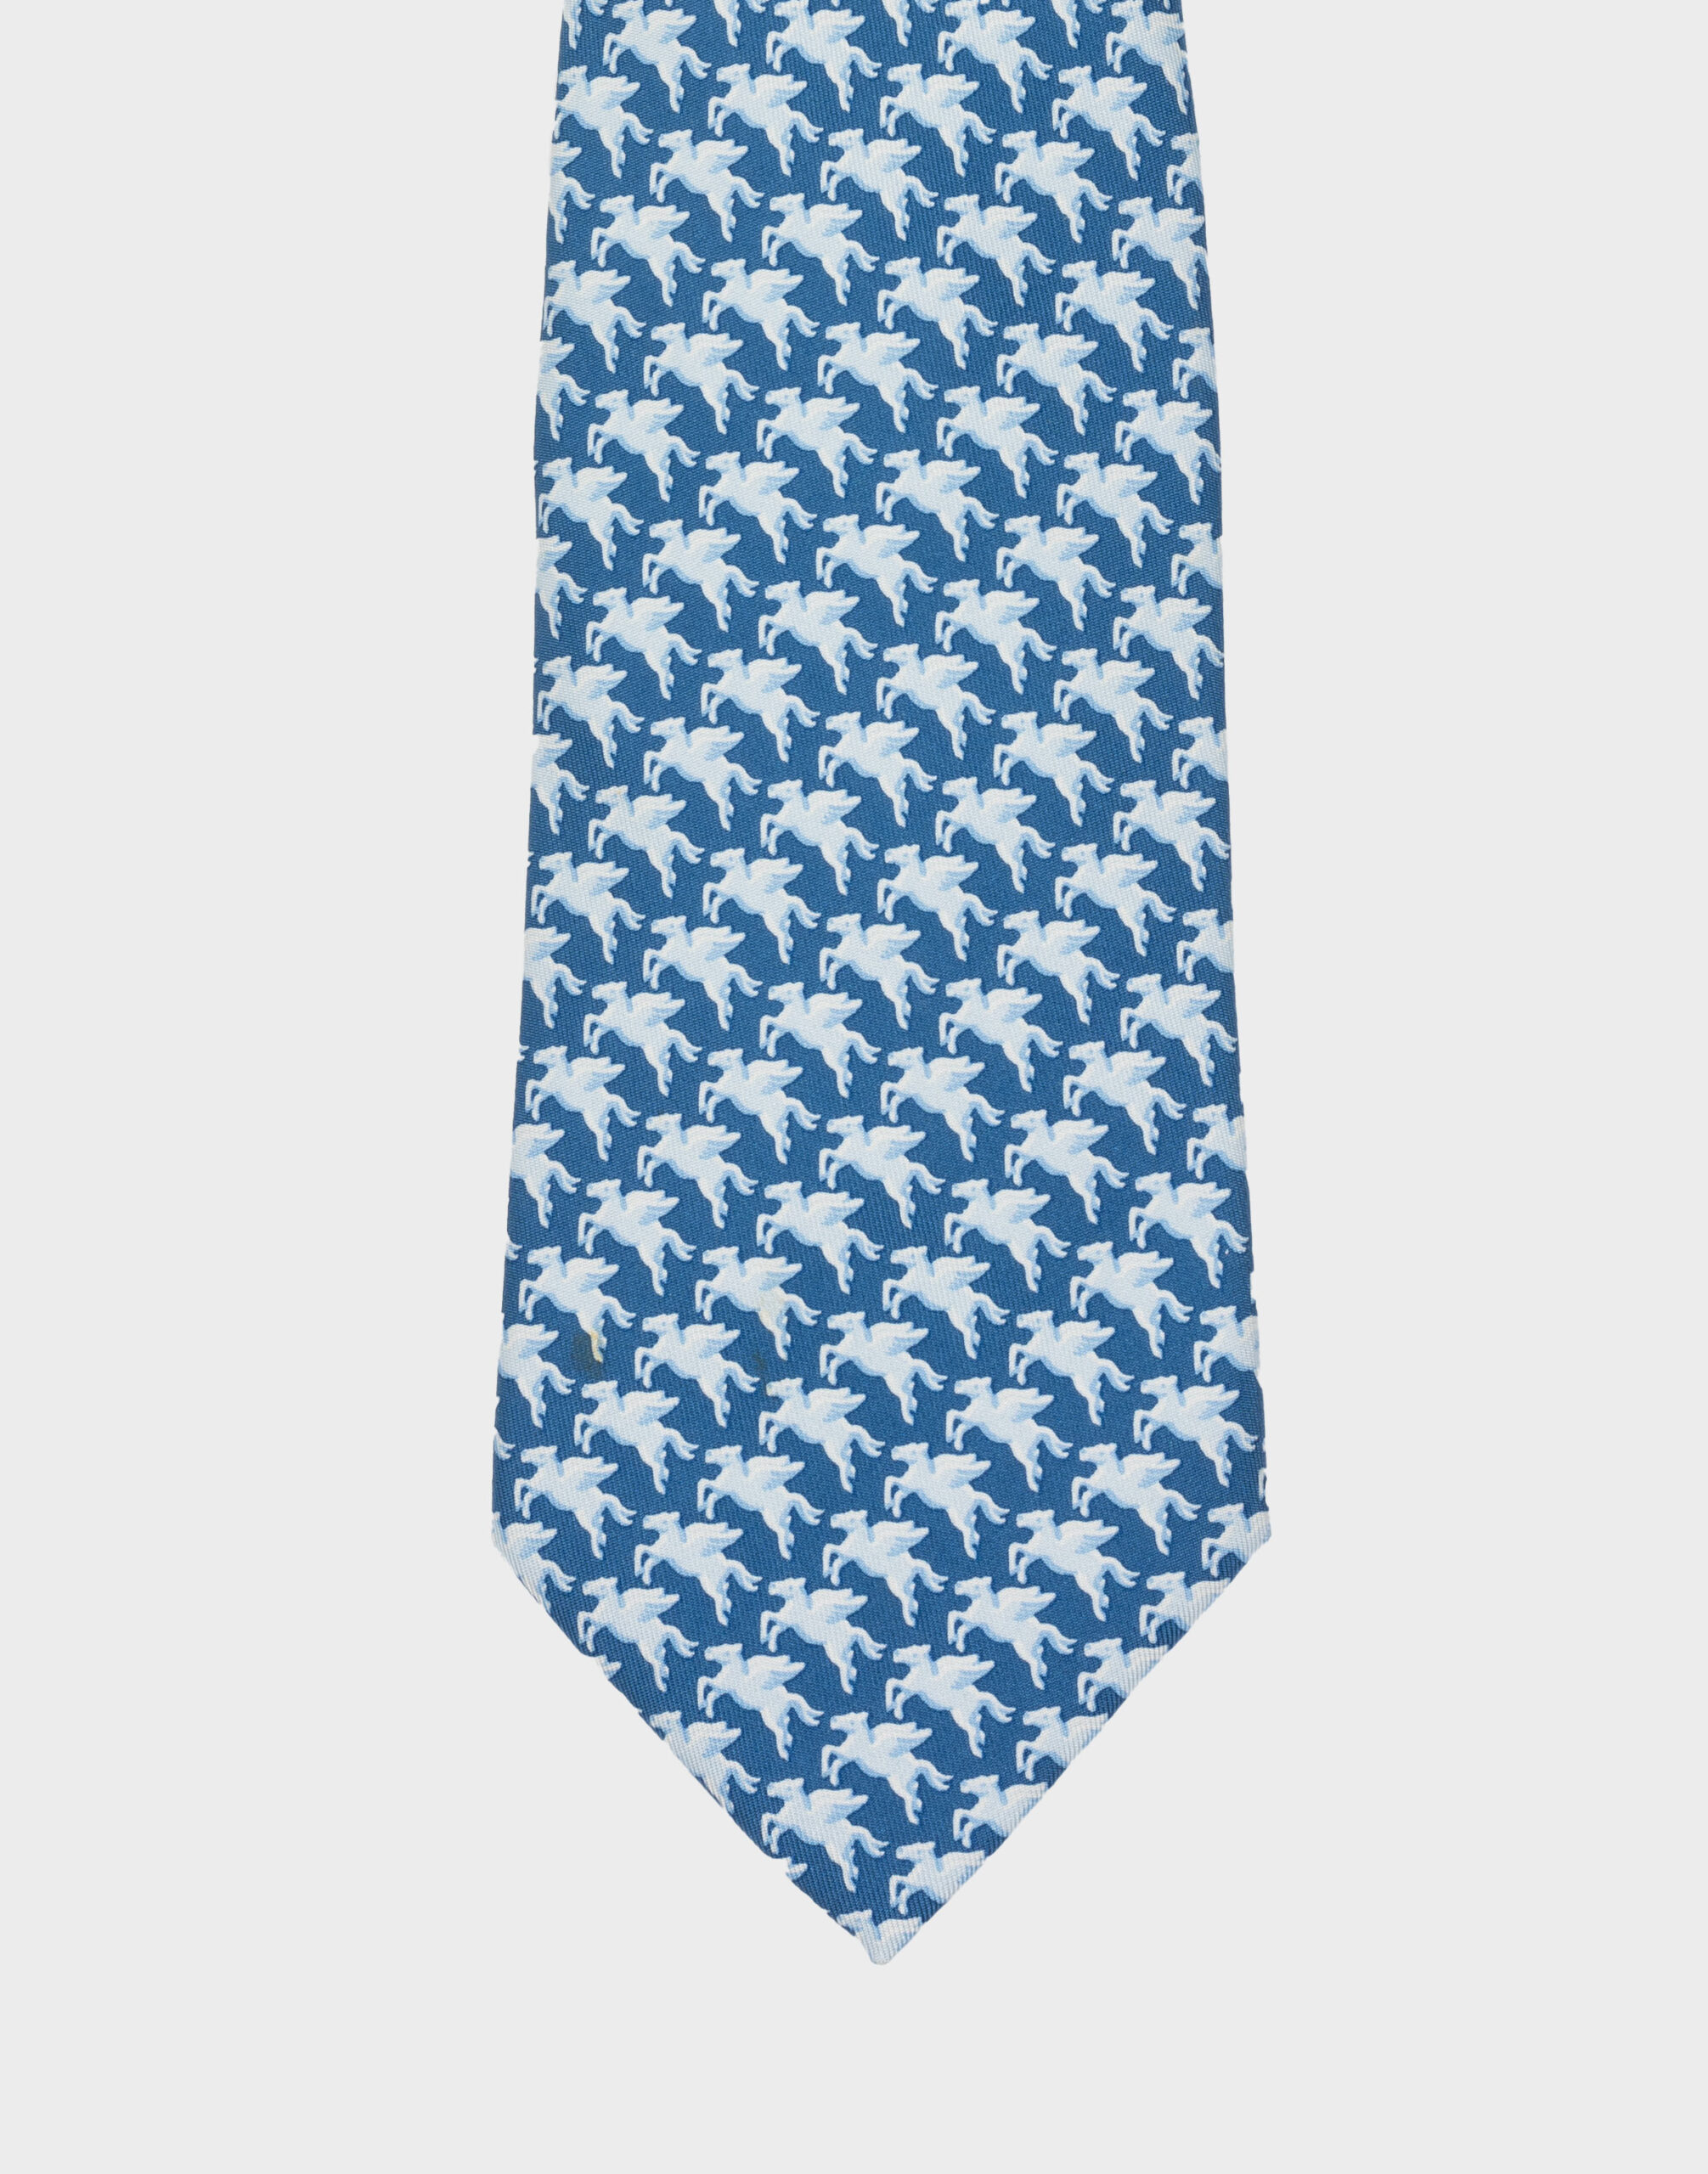 Men's silk tie in light blue with Pegasus print